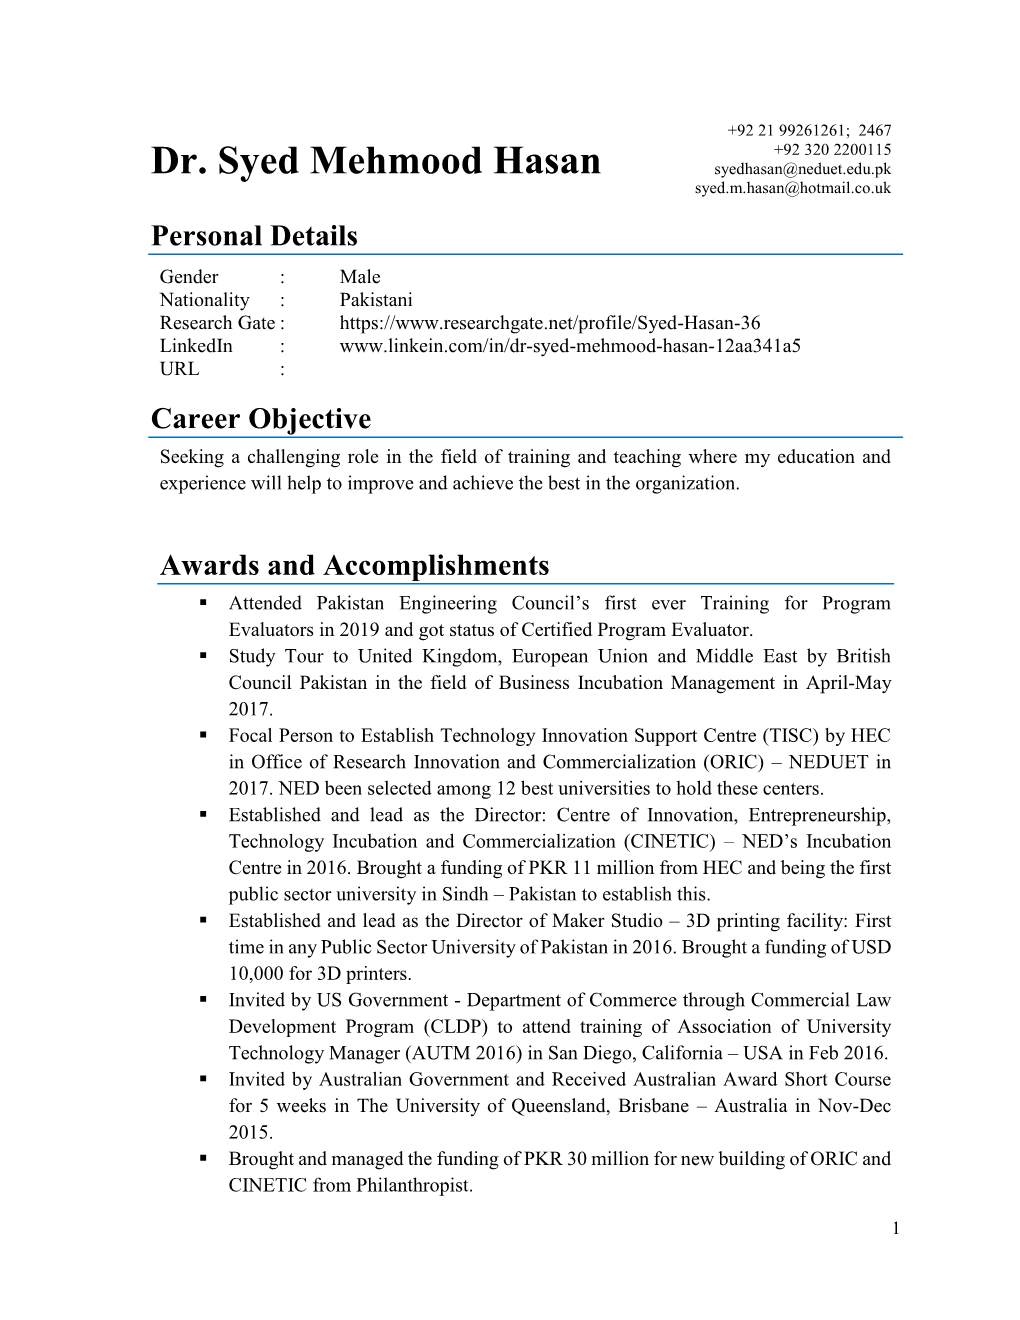 Dr. Syed Mehmood Hasan